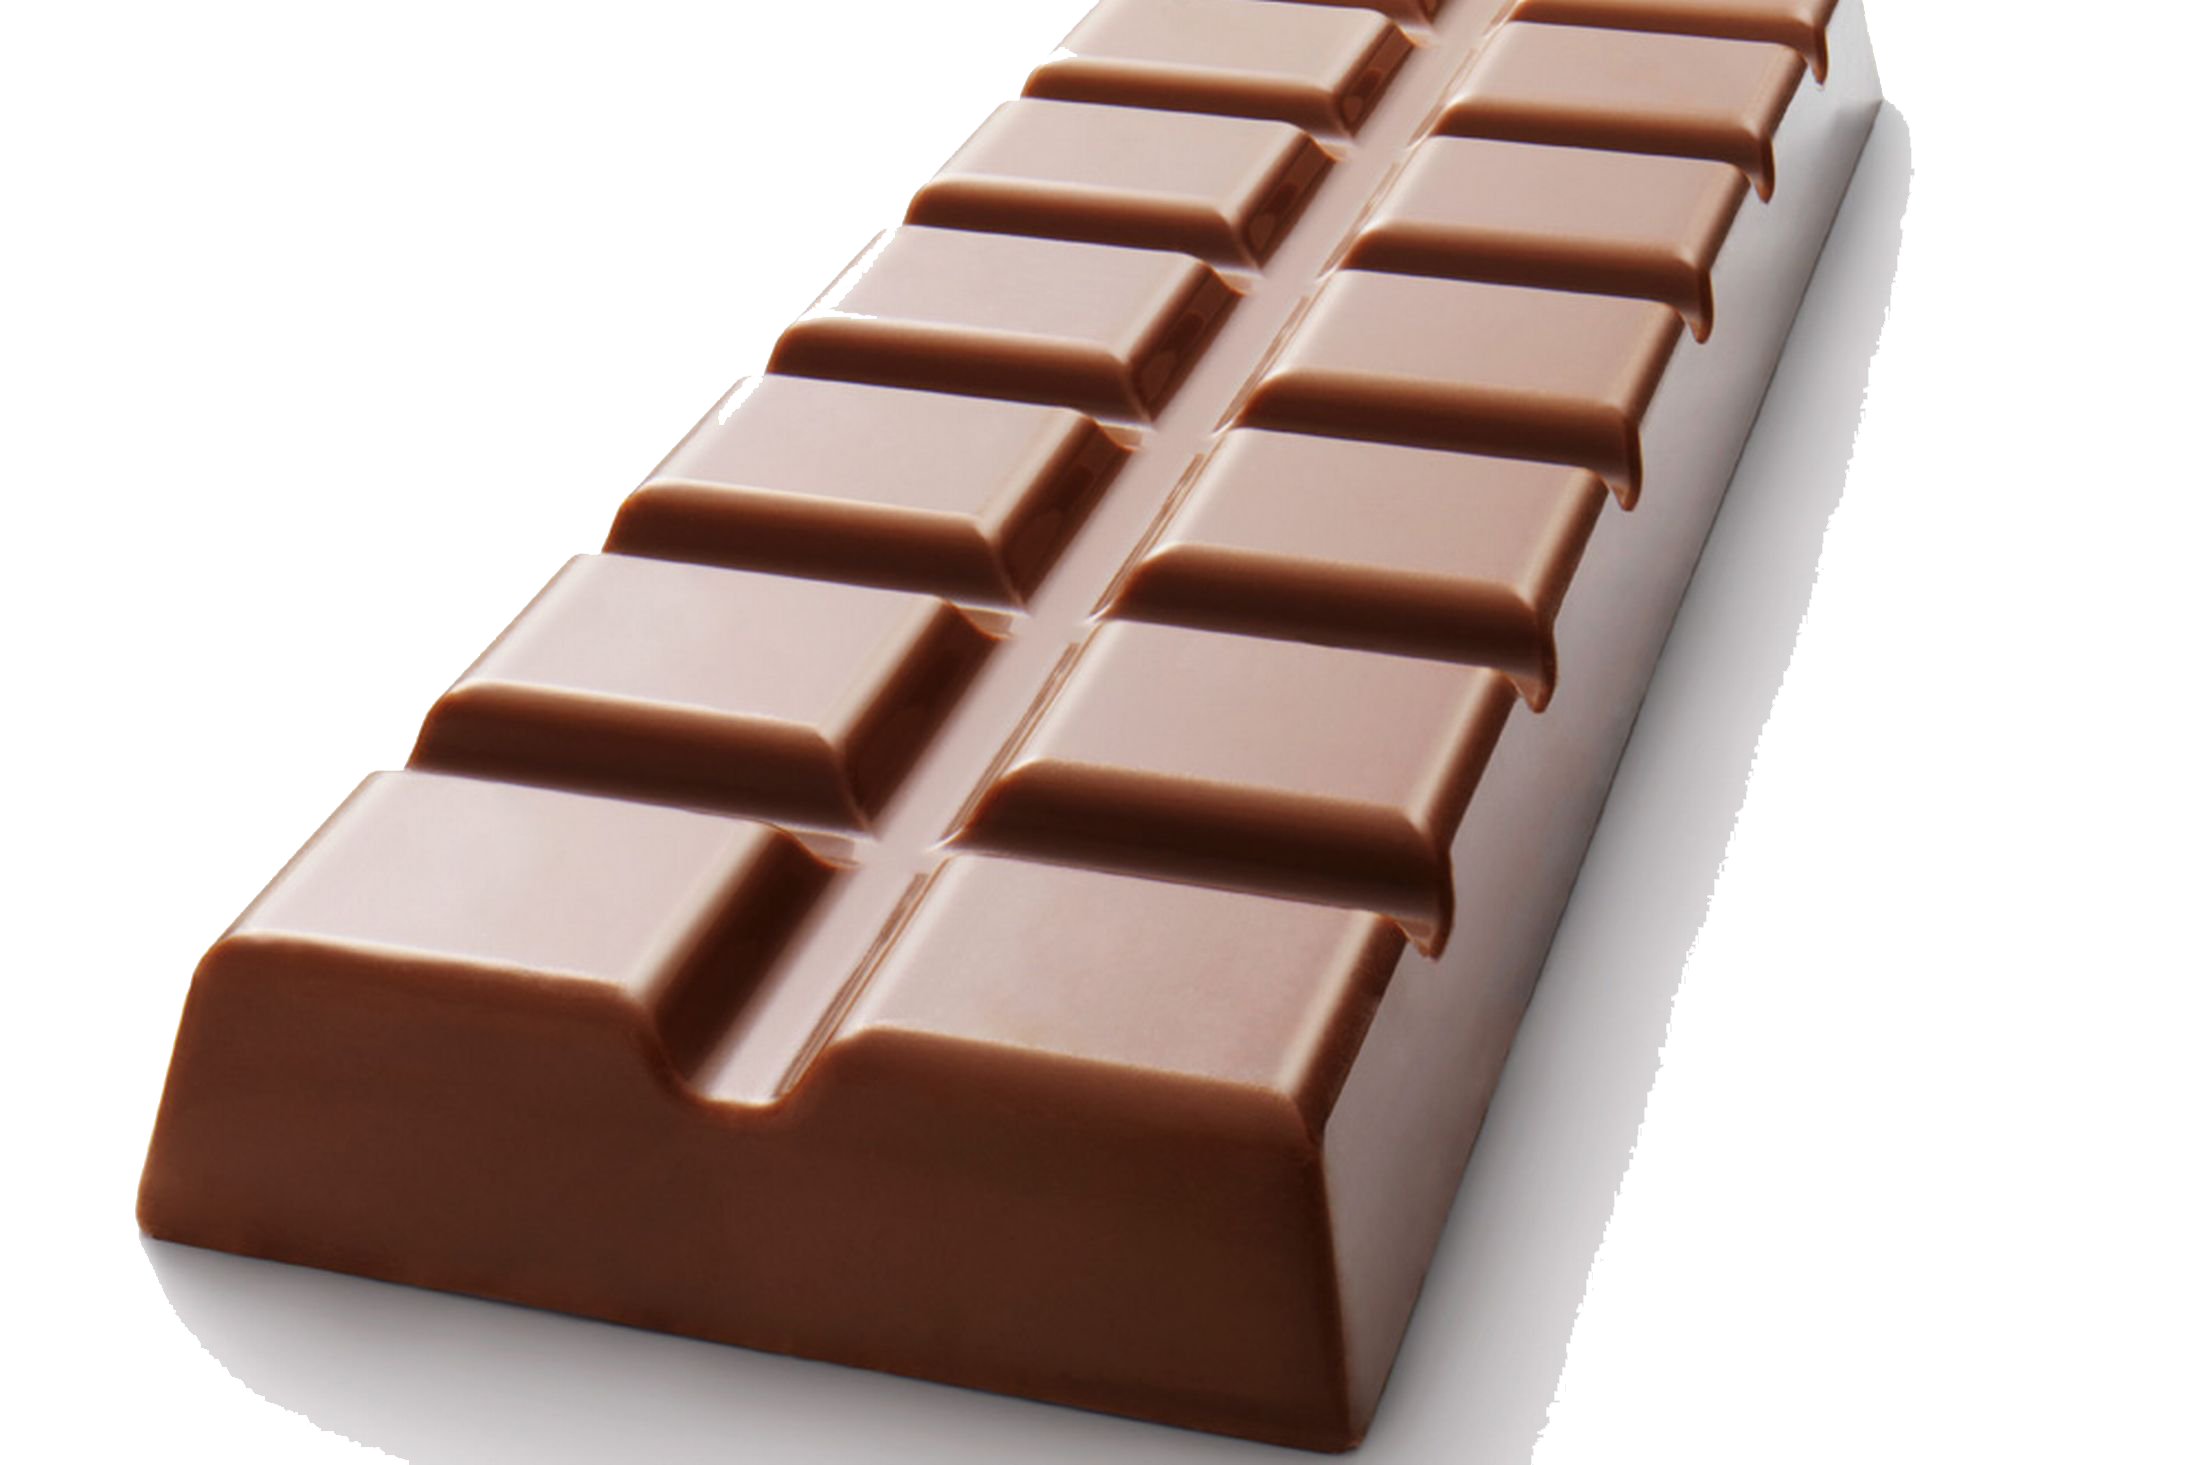 Chocolate Bar HD PNG - 94309